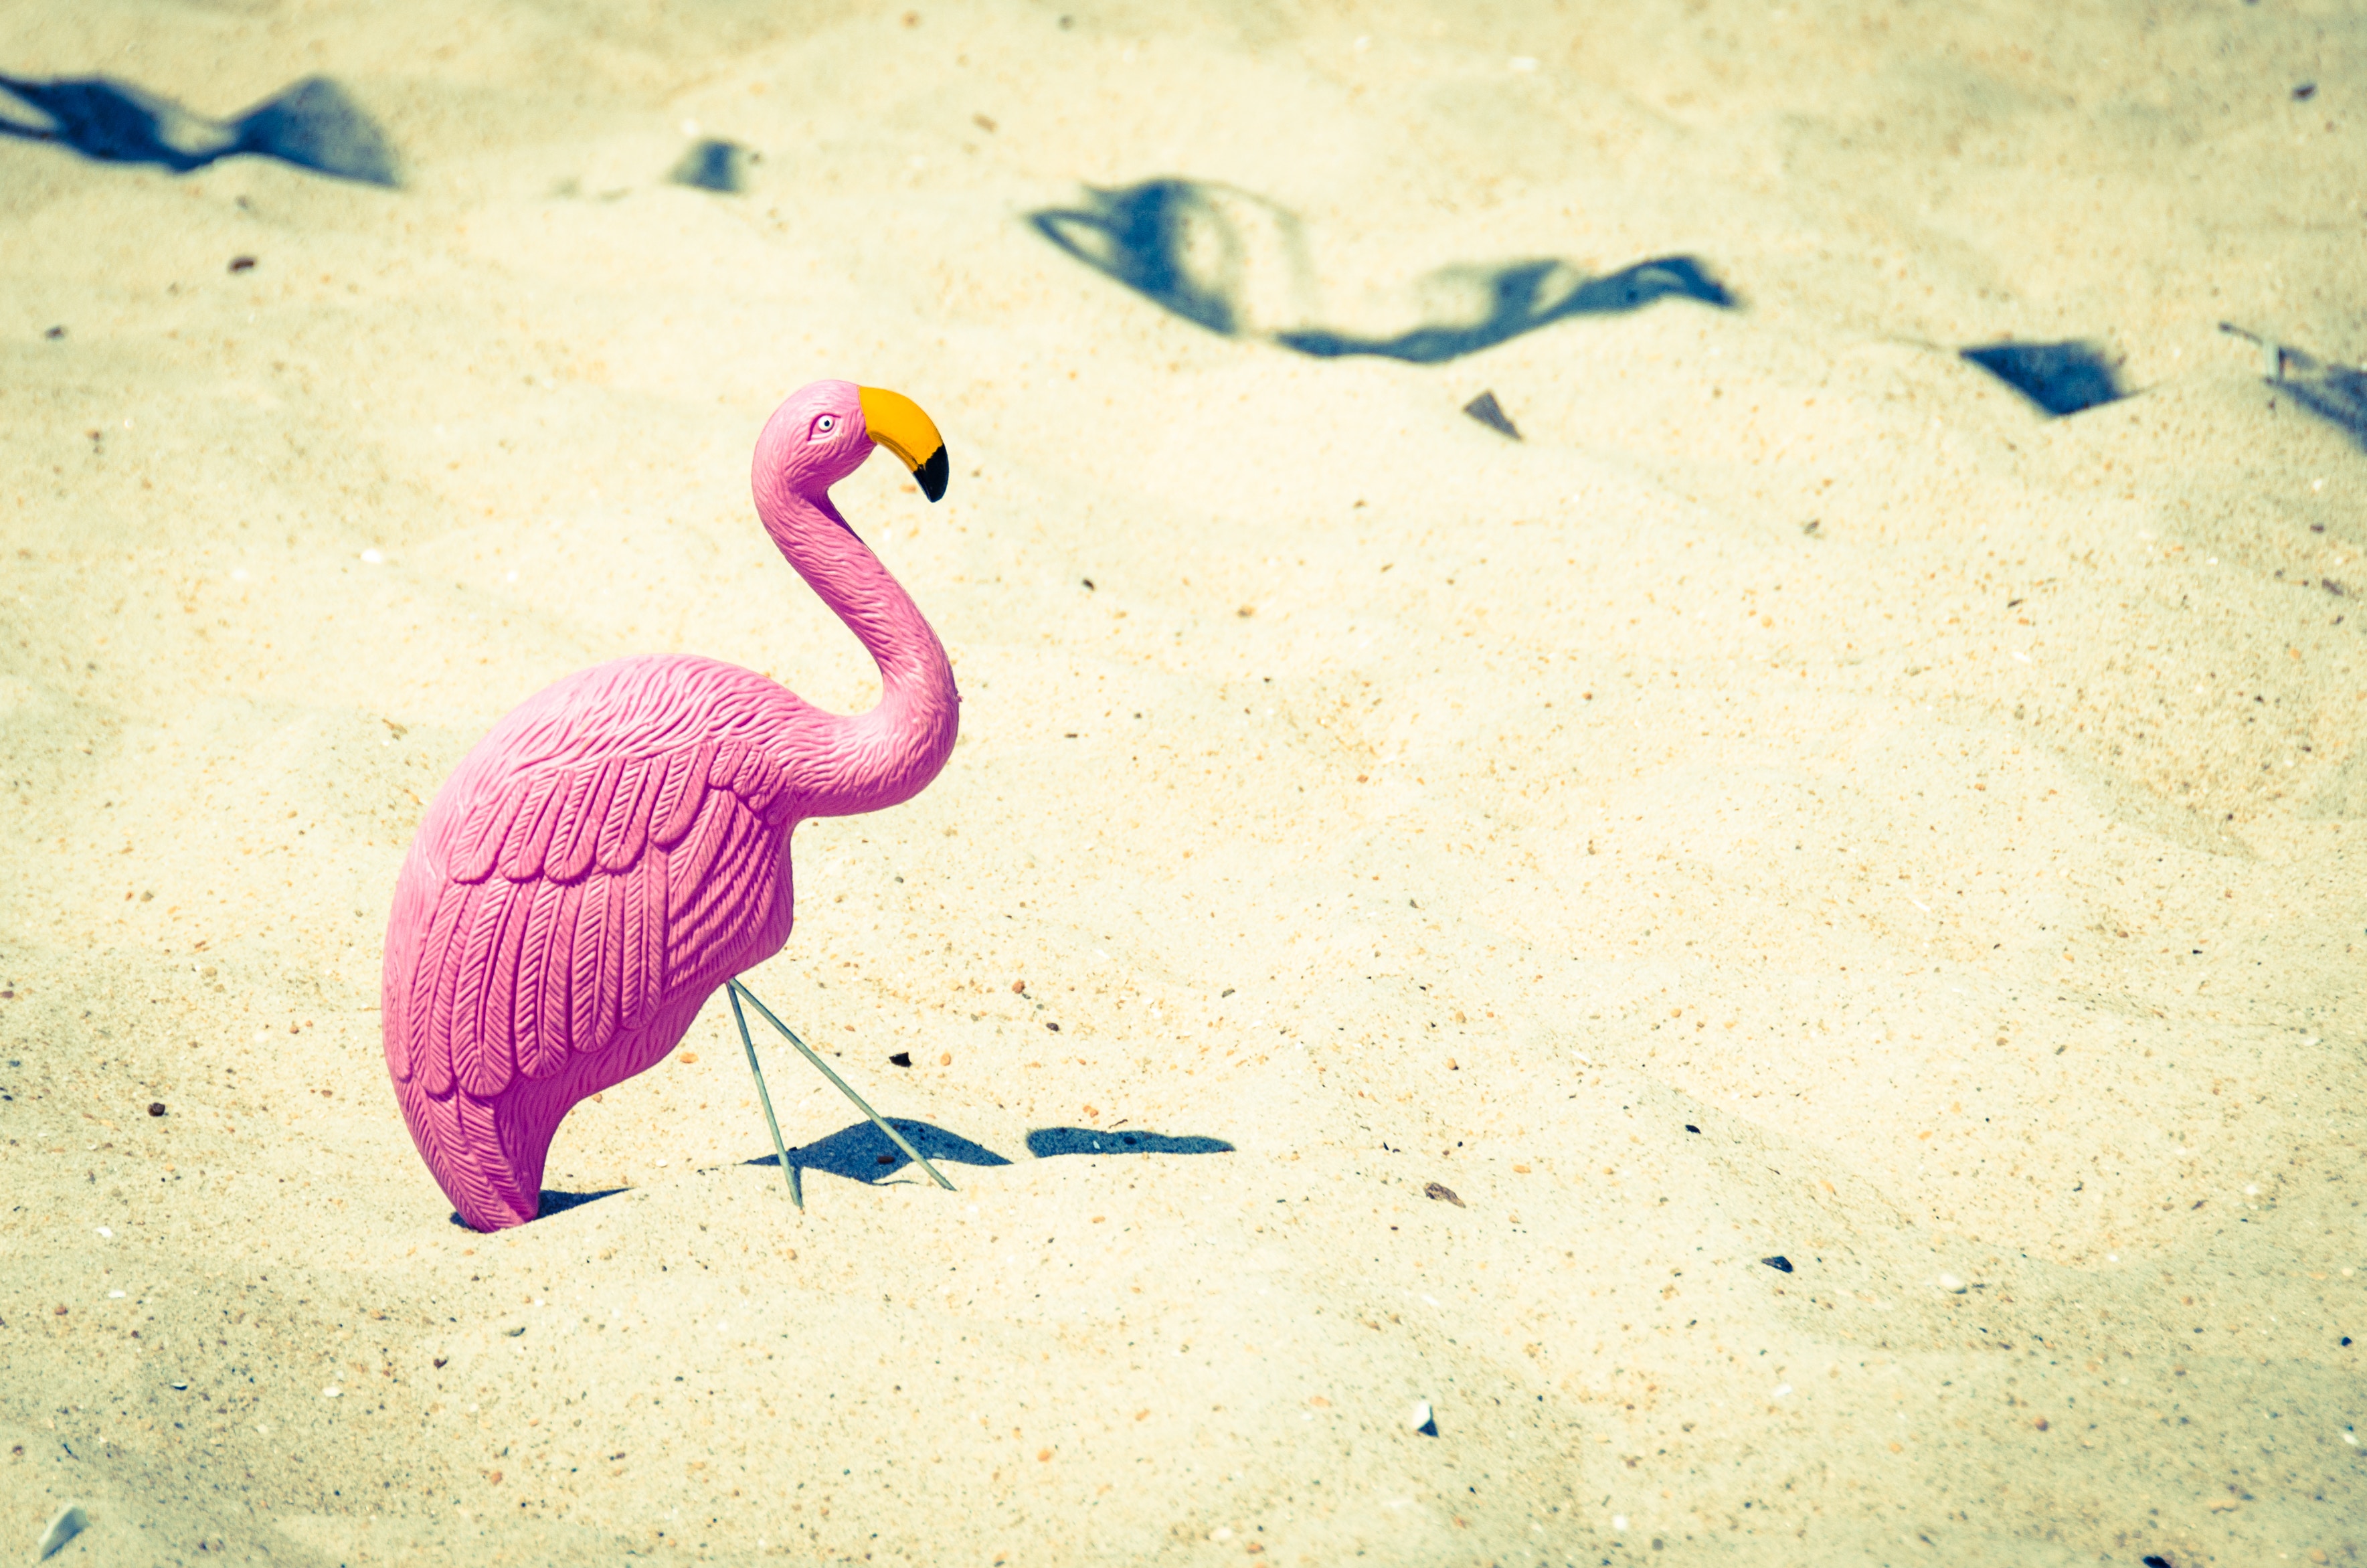 A lone flamingo ornament in the sand.